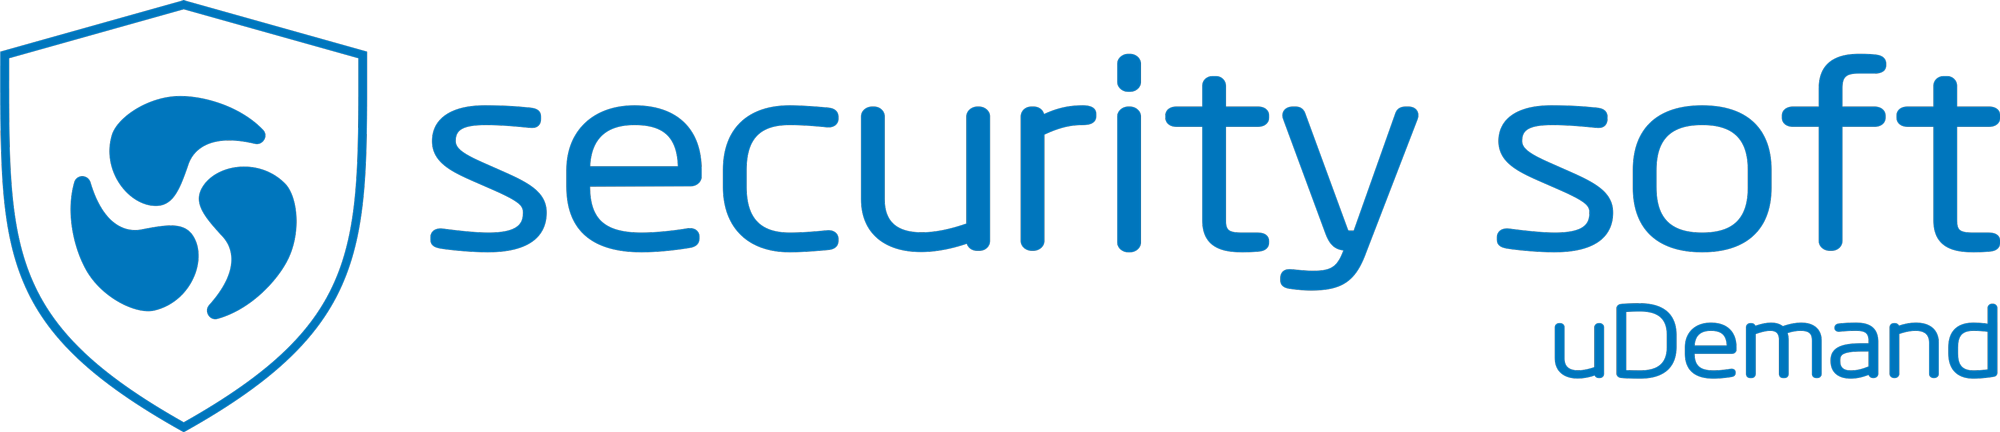 logo security soft udemand